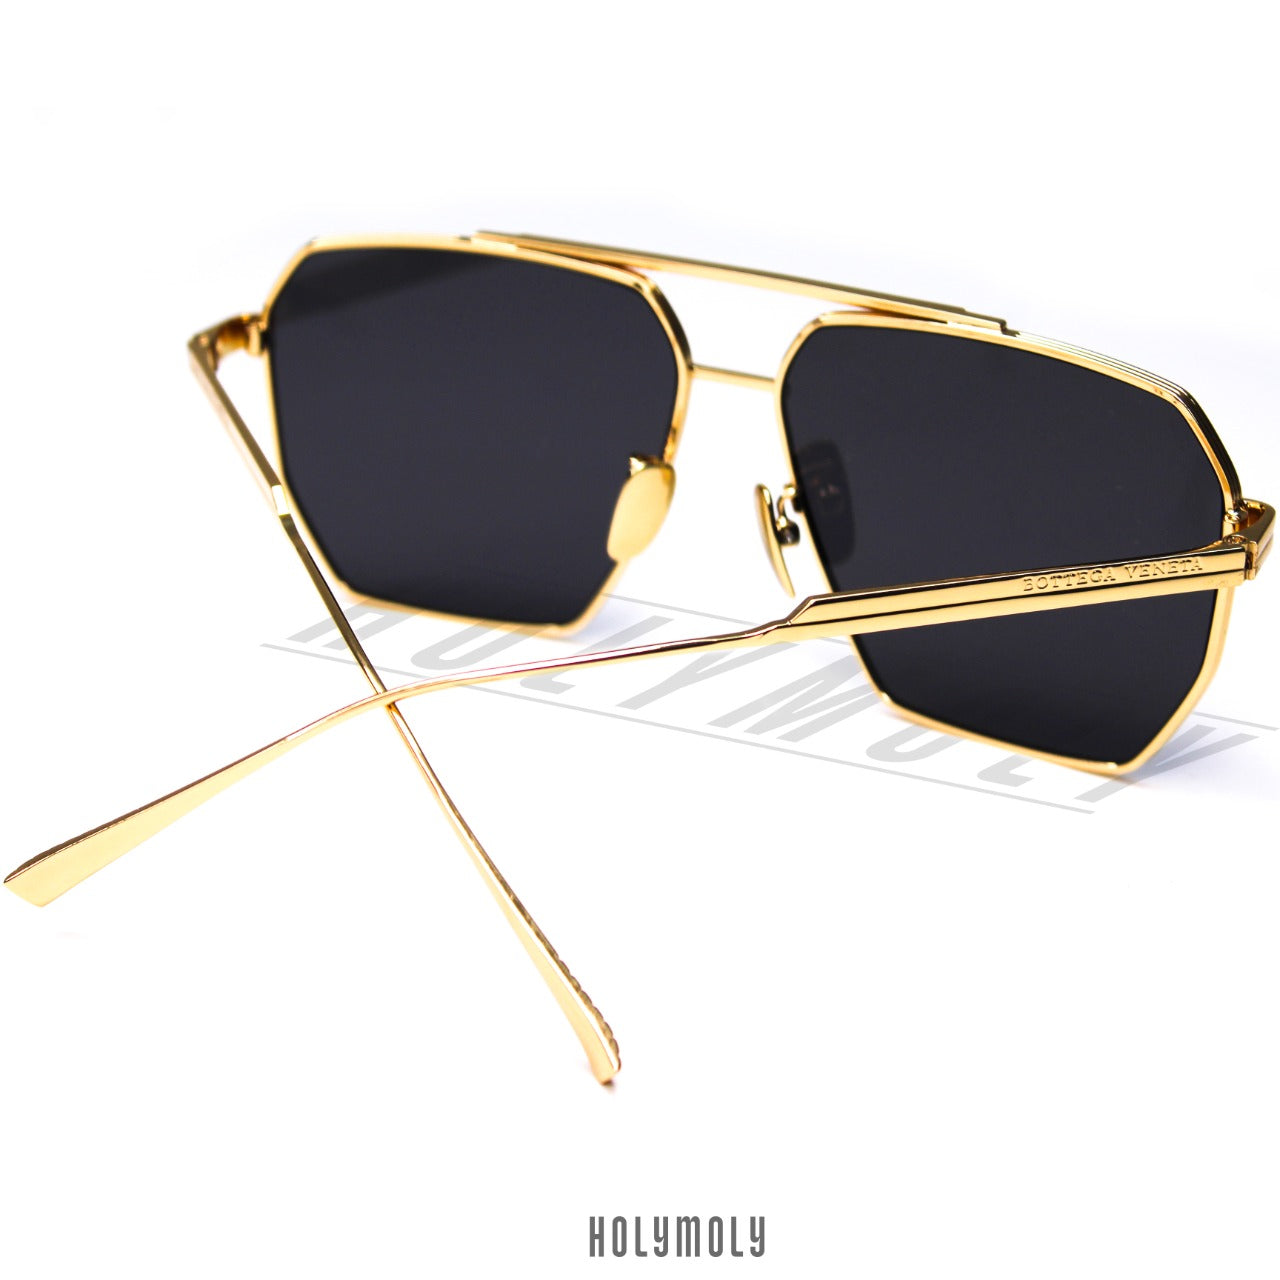 Bottega Veneta Eyewear square-frame aviator sunglasses